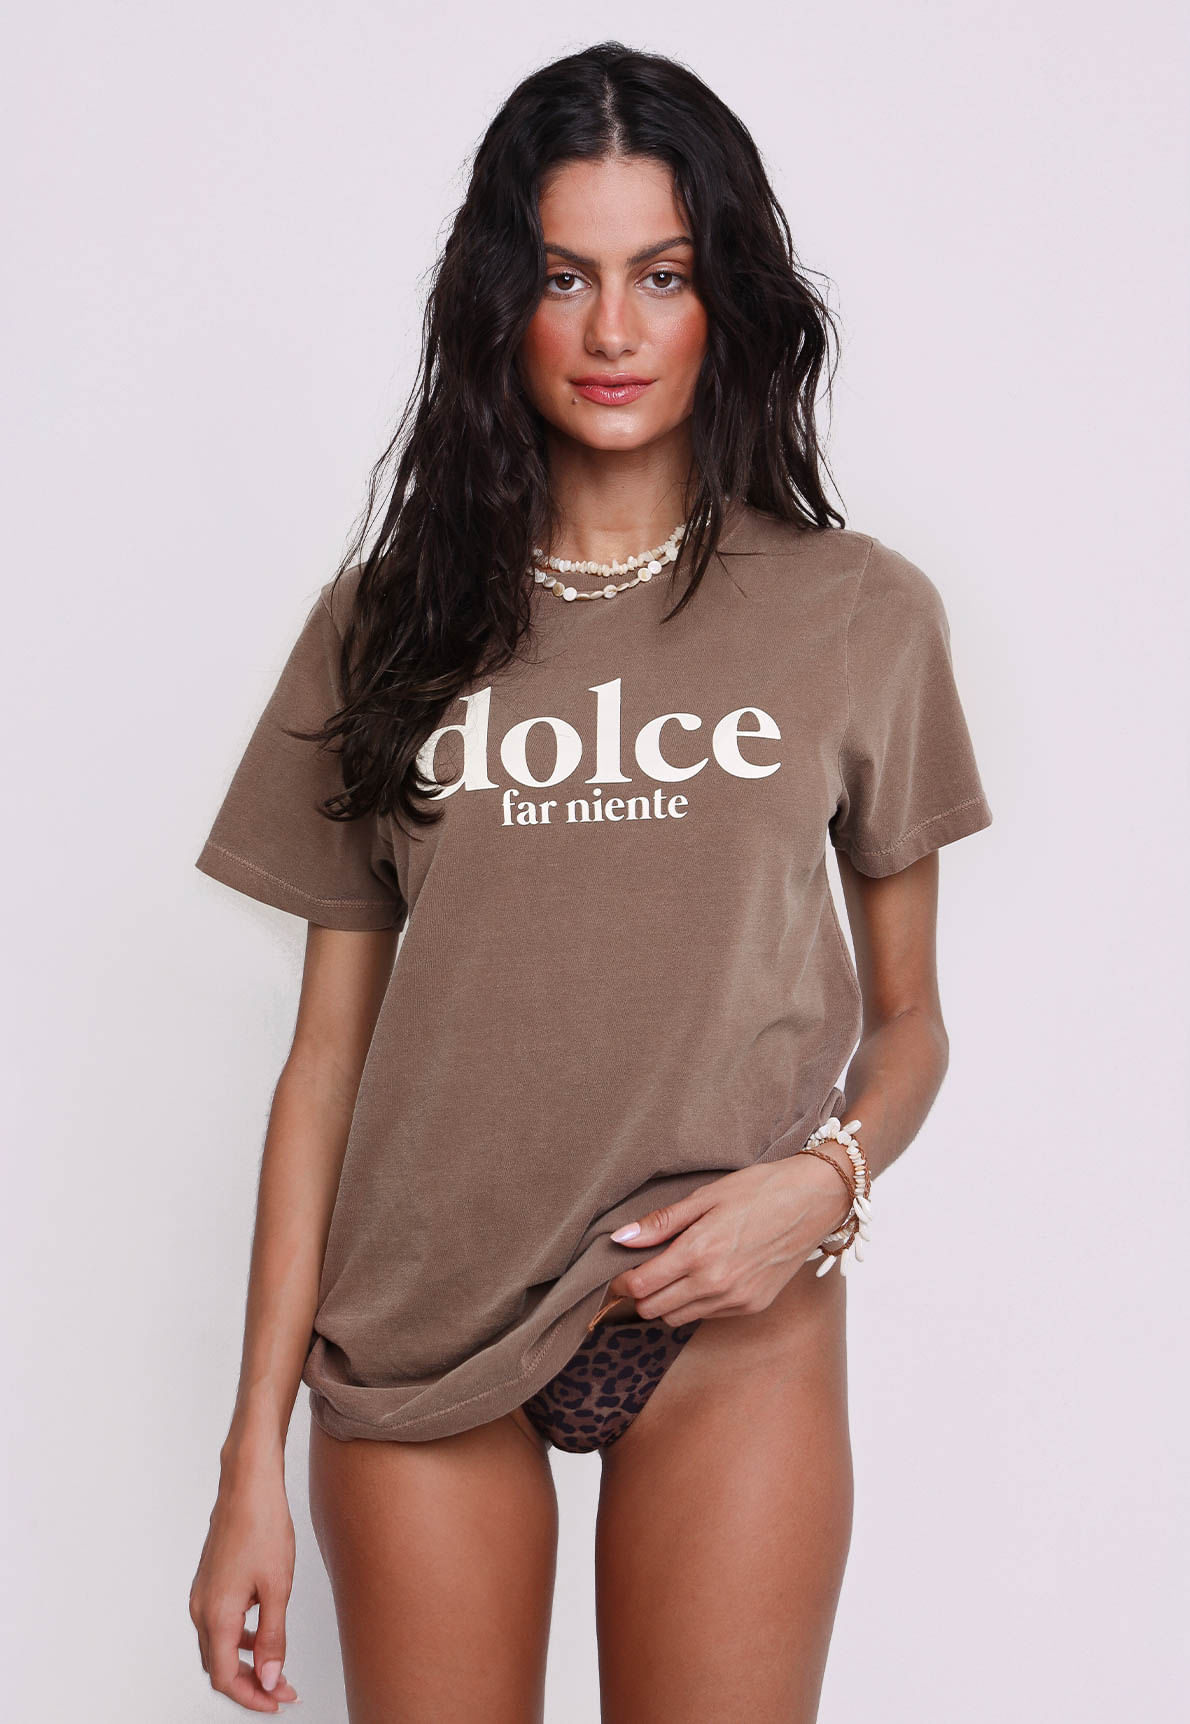 41057-t-shirt-dolce-far-niente-mundo-lolita-1